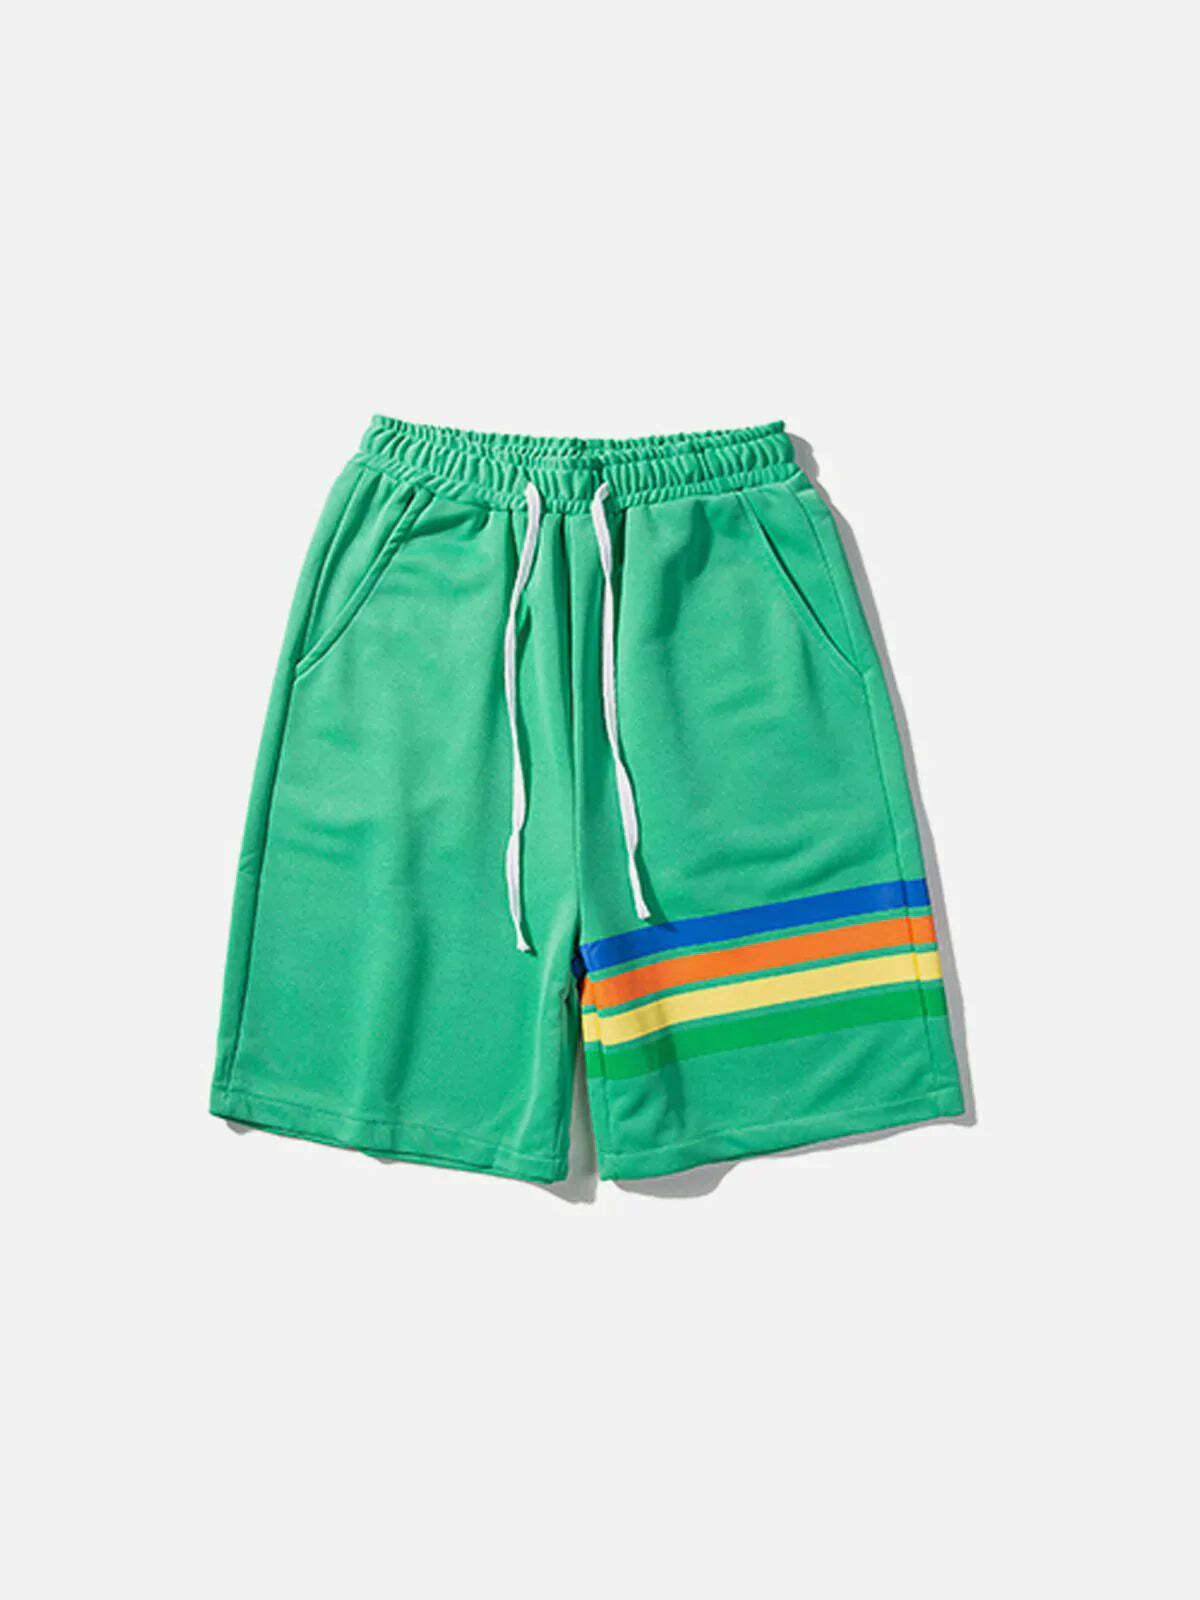 sleek striped drawstring shorts urban chic essential 4661